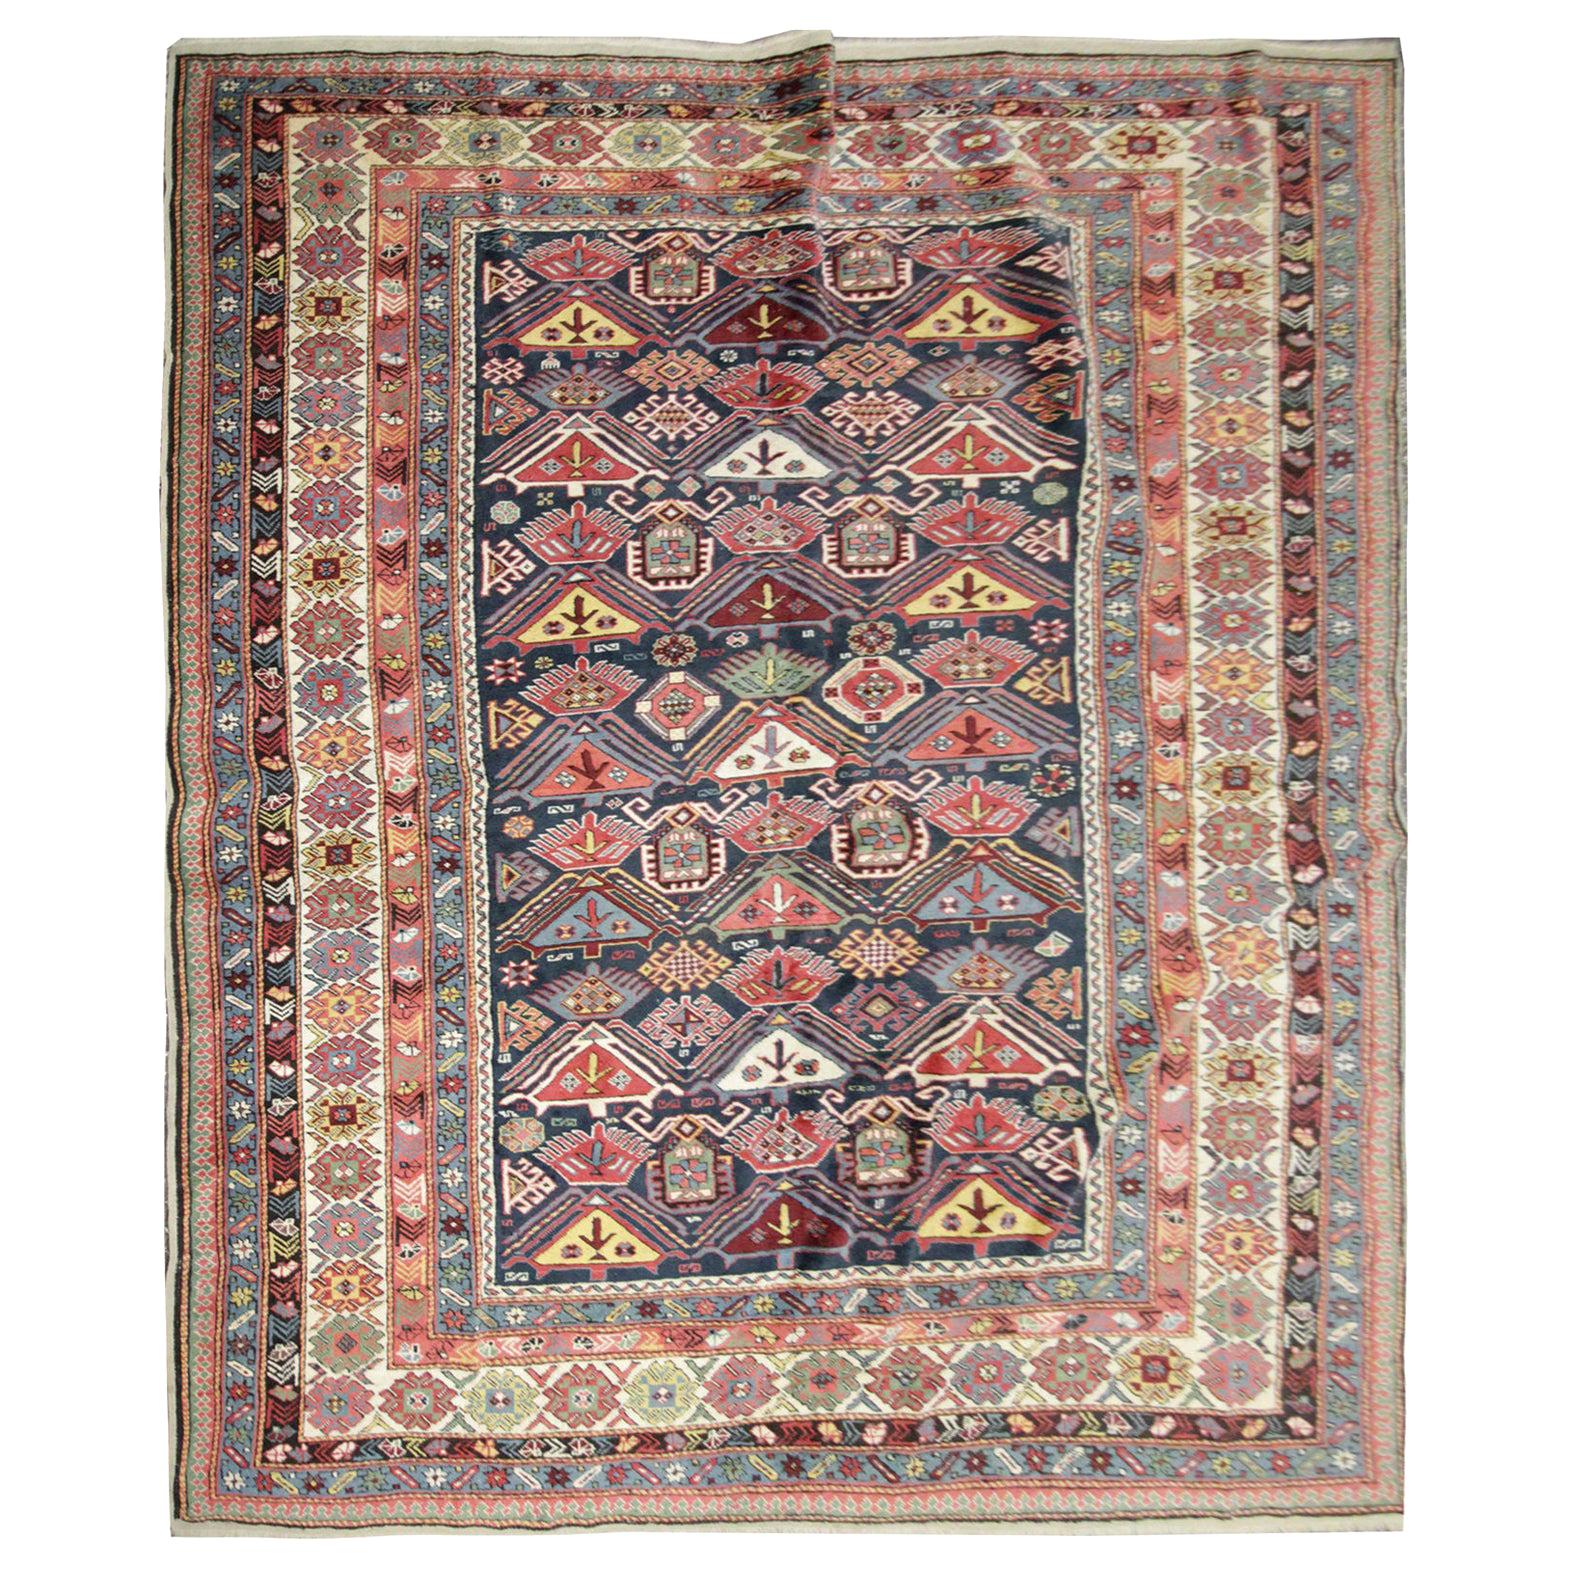 Tapis ancien, tapis artisanal du Caucase oriental, tapis de salon en vente en vente